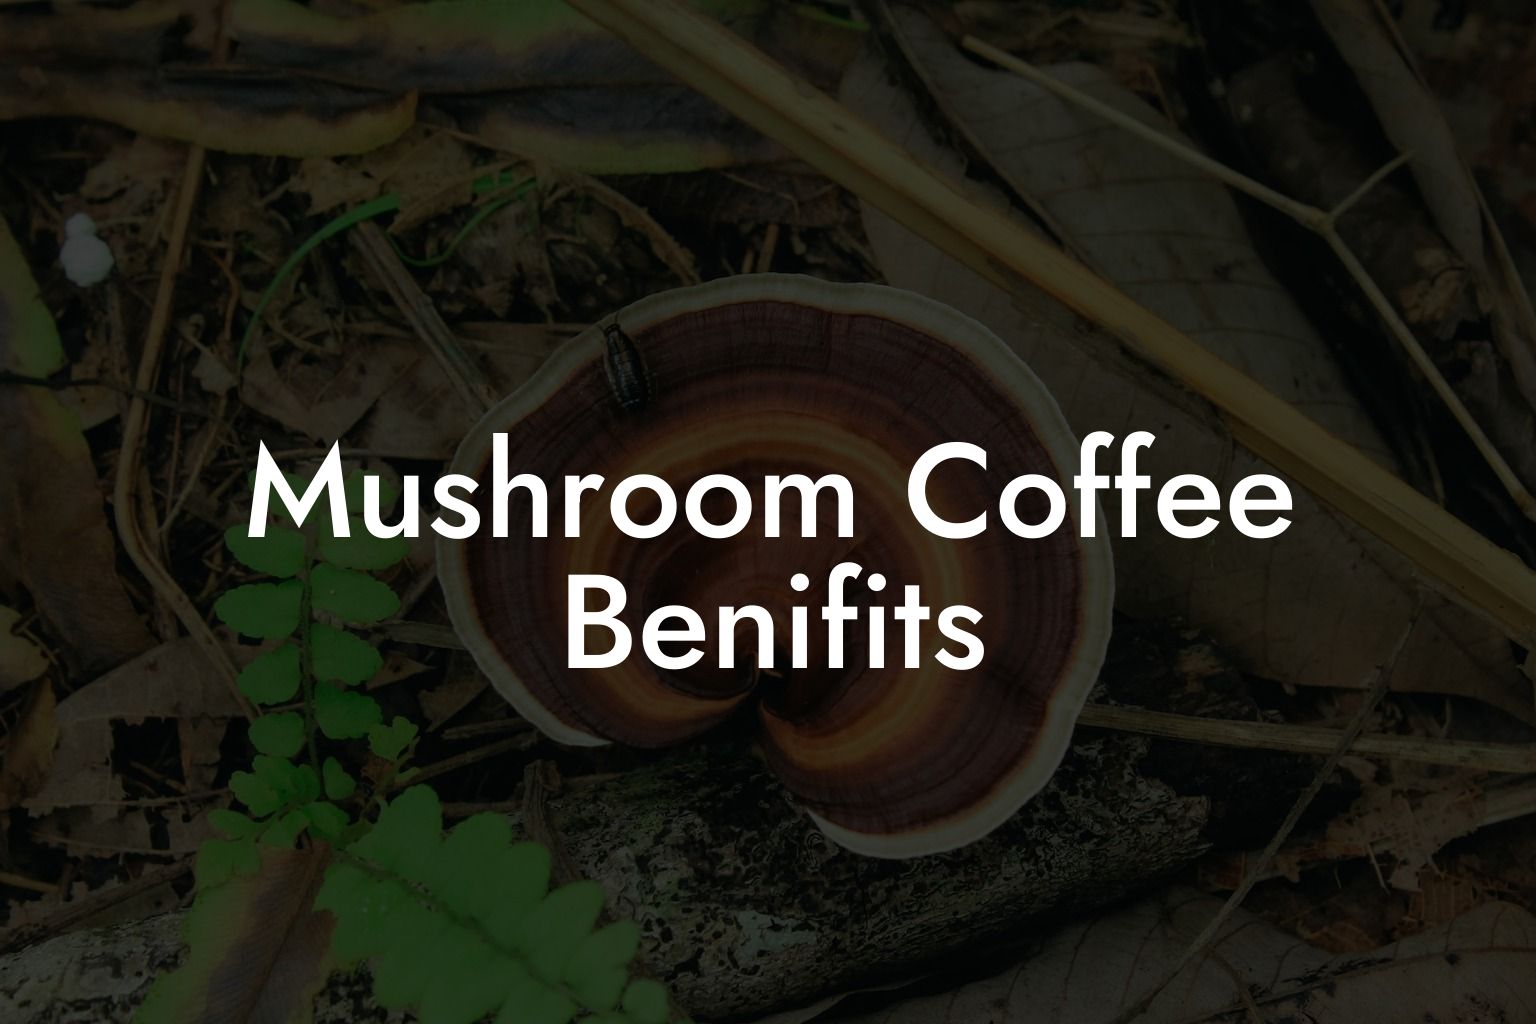 Mushroom Coffee Benifits